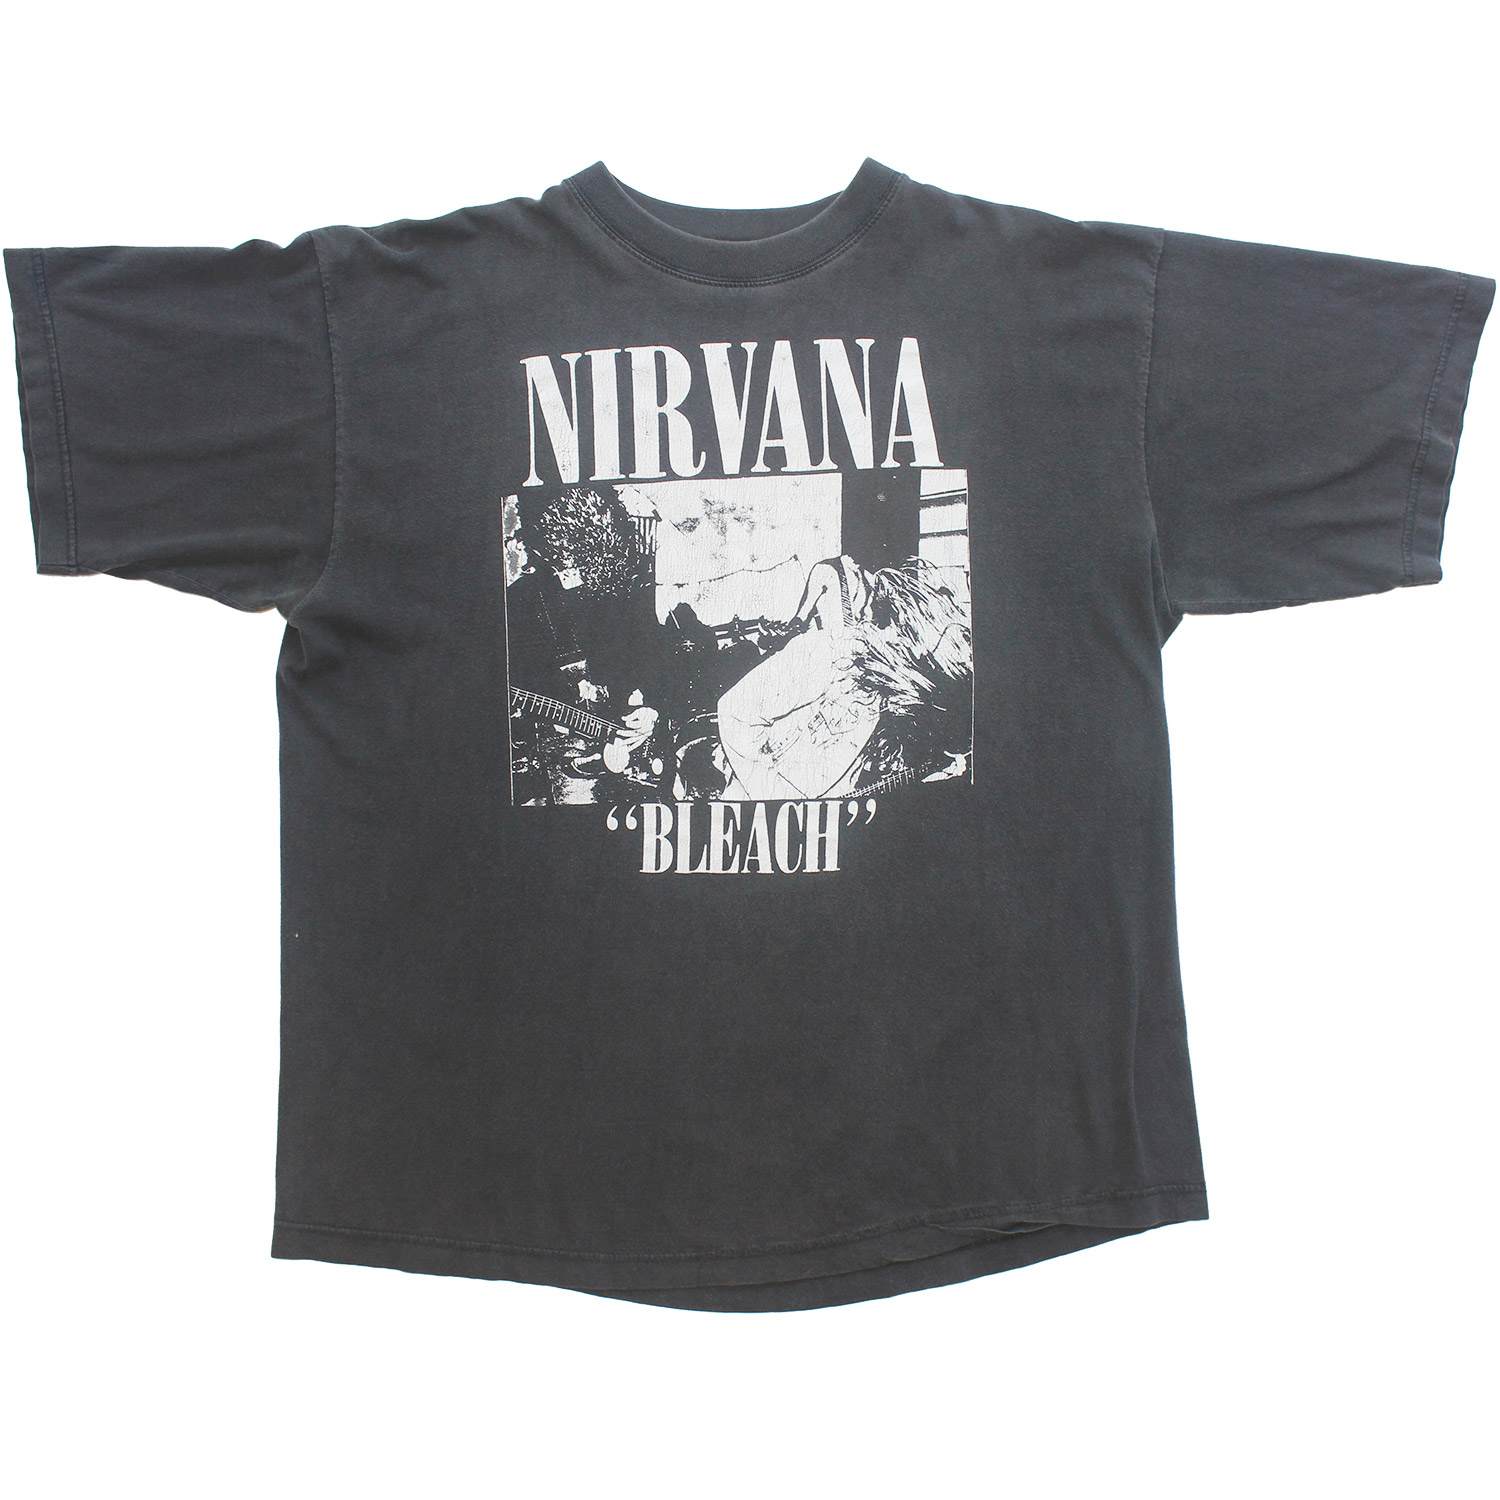 http://blackshirtsworld.com/products/nirvana-bleach-t-shirt/NIRVANA-BLEACH-T-SHIRT-1.jpg